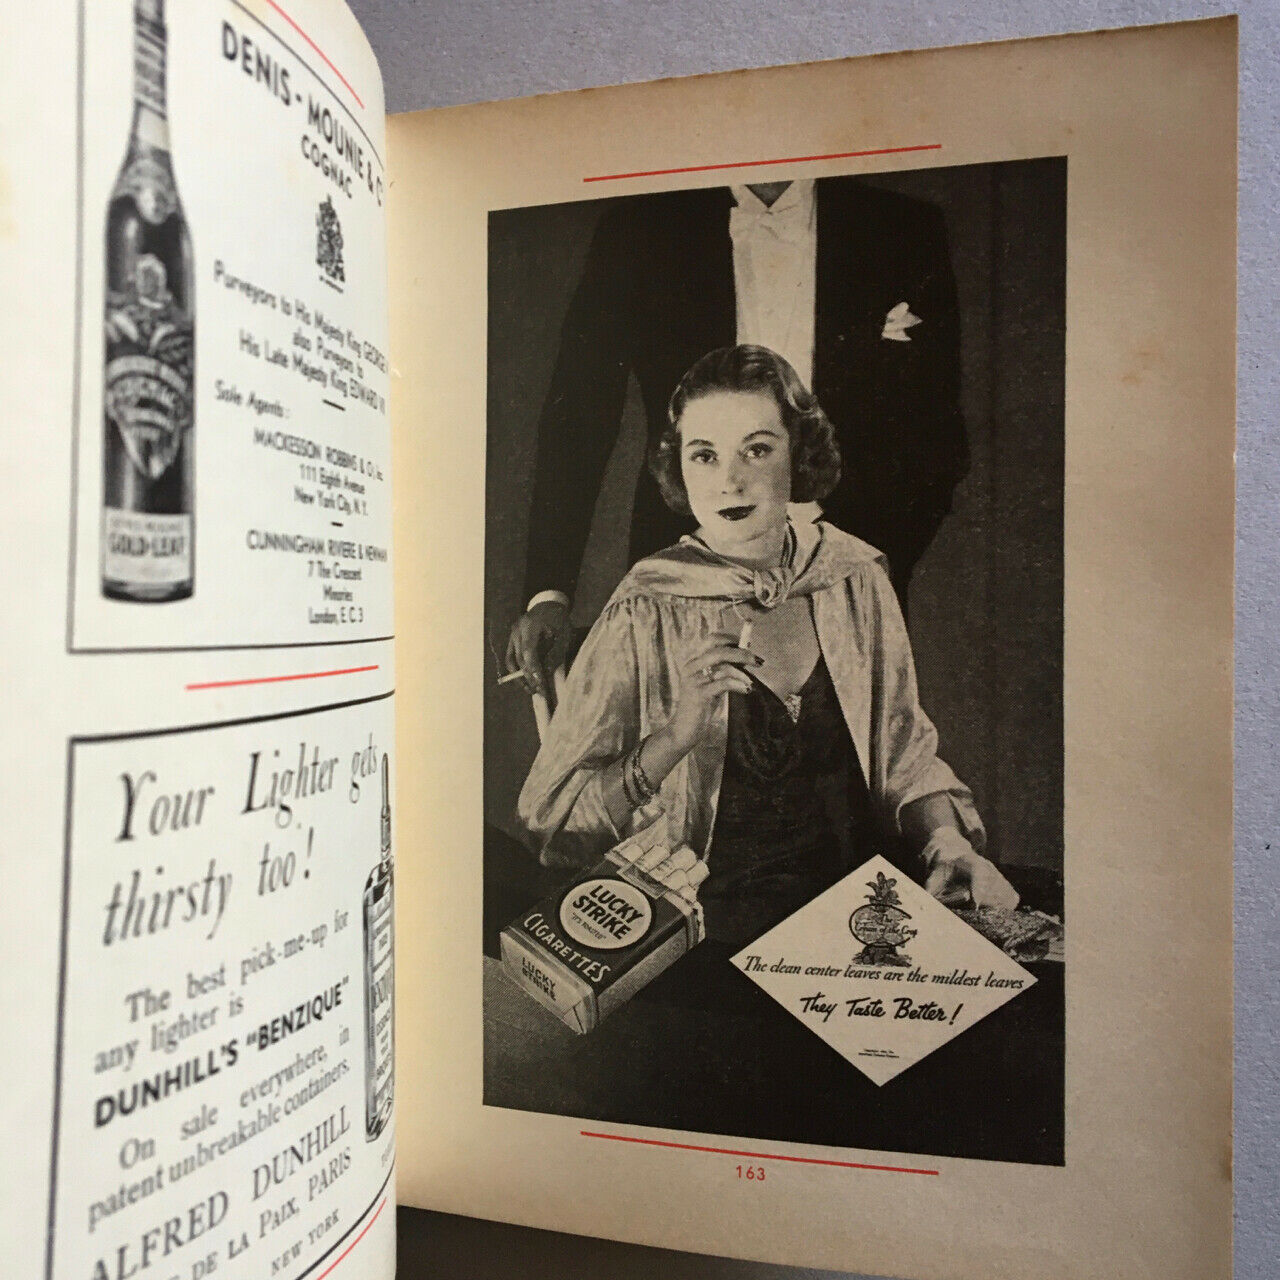 Frank Meier of the Ritz bar, Paris — The Artistry of mixing drinks — original edition —— Fryam Press — 1936.